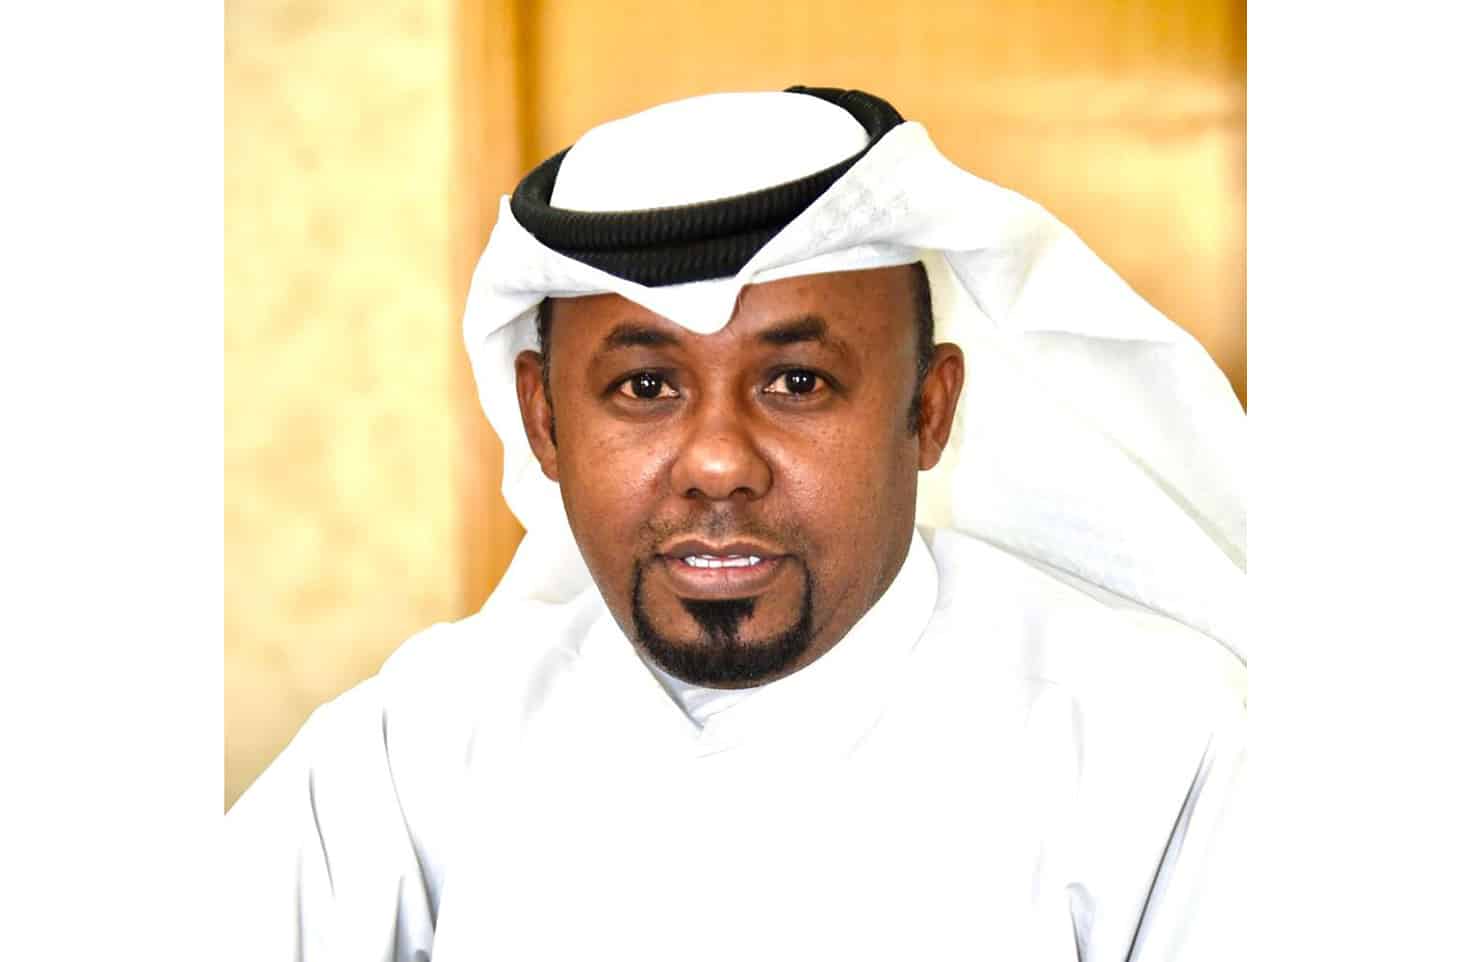 Media figure and presenter at Kuwait Television Raed Al-Shimmeri